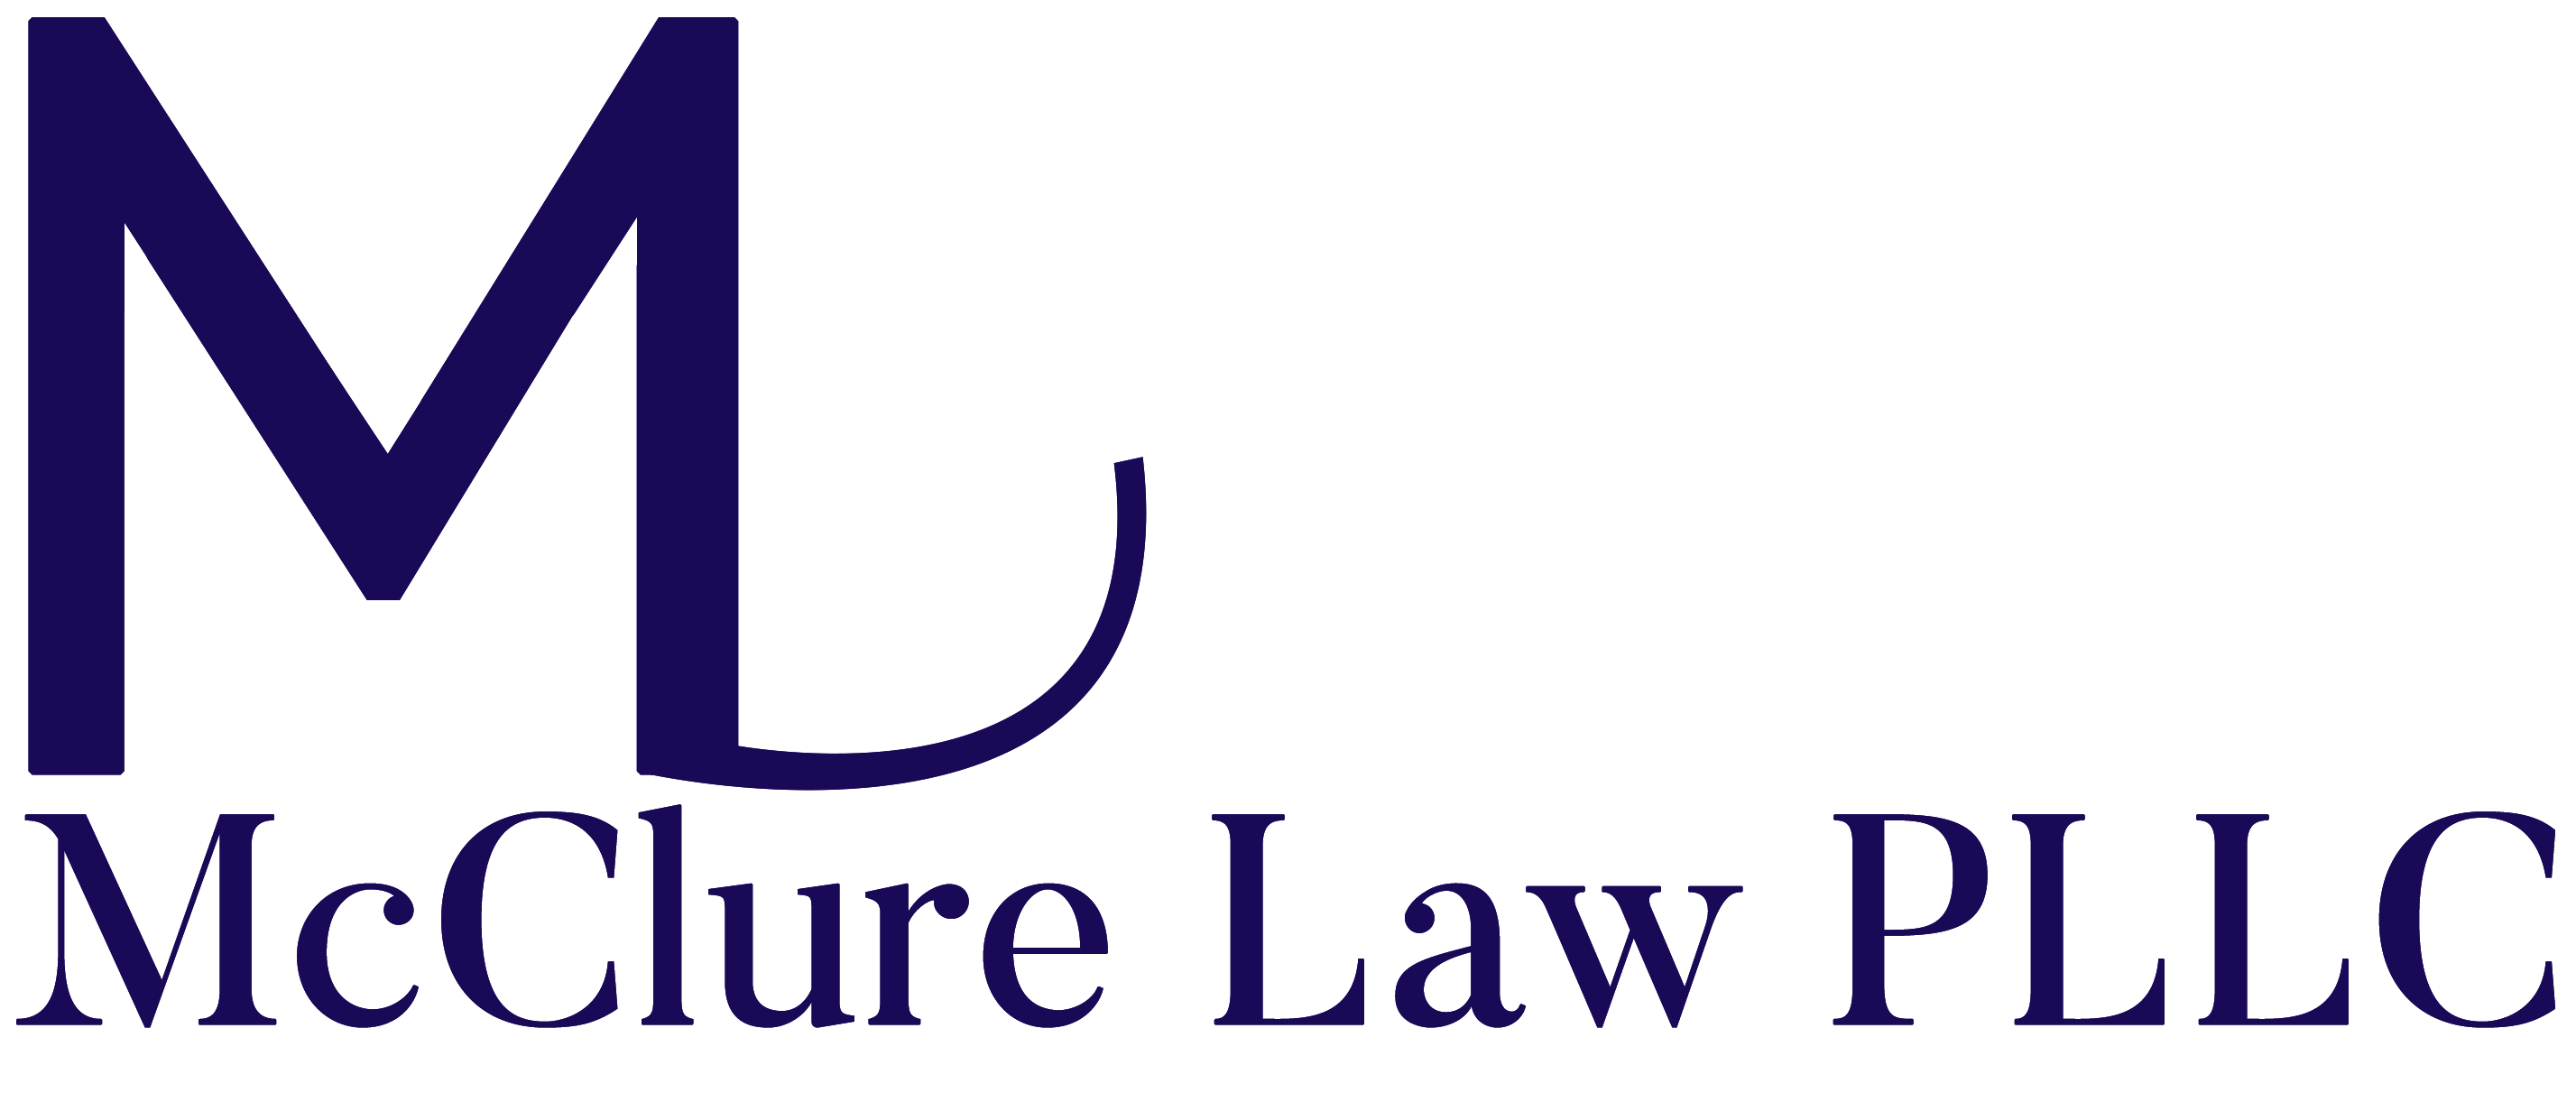 McClure Law PLLC | Legal Representation in North Central West Virginia, Clarksburg